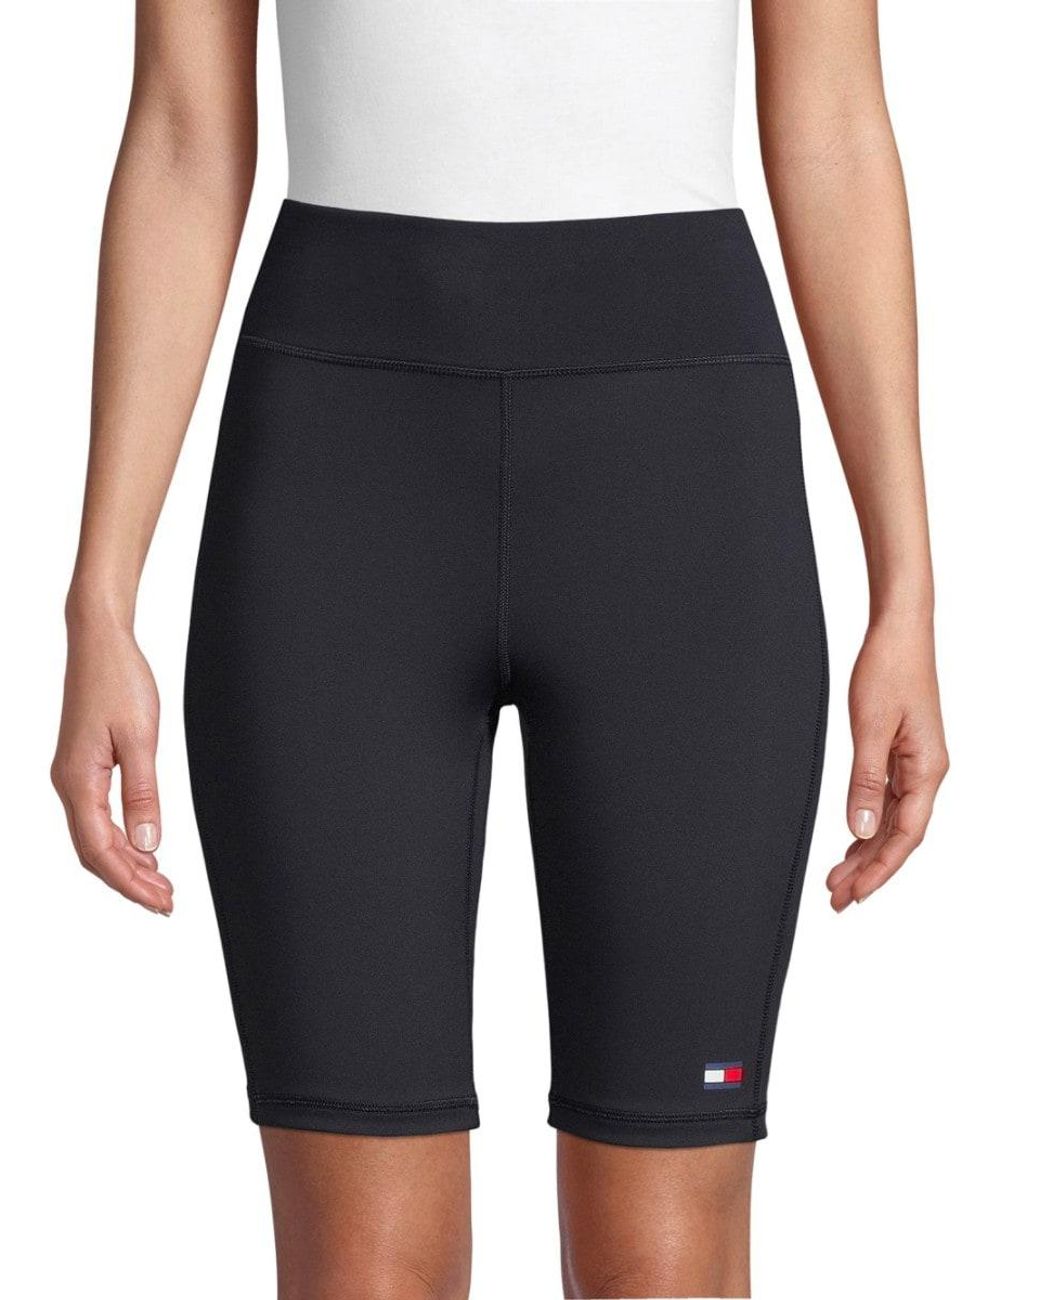 Stretch Bike Shorts - Black - Size S 